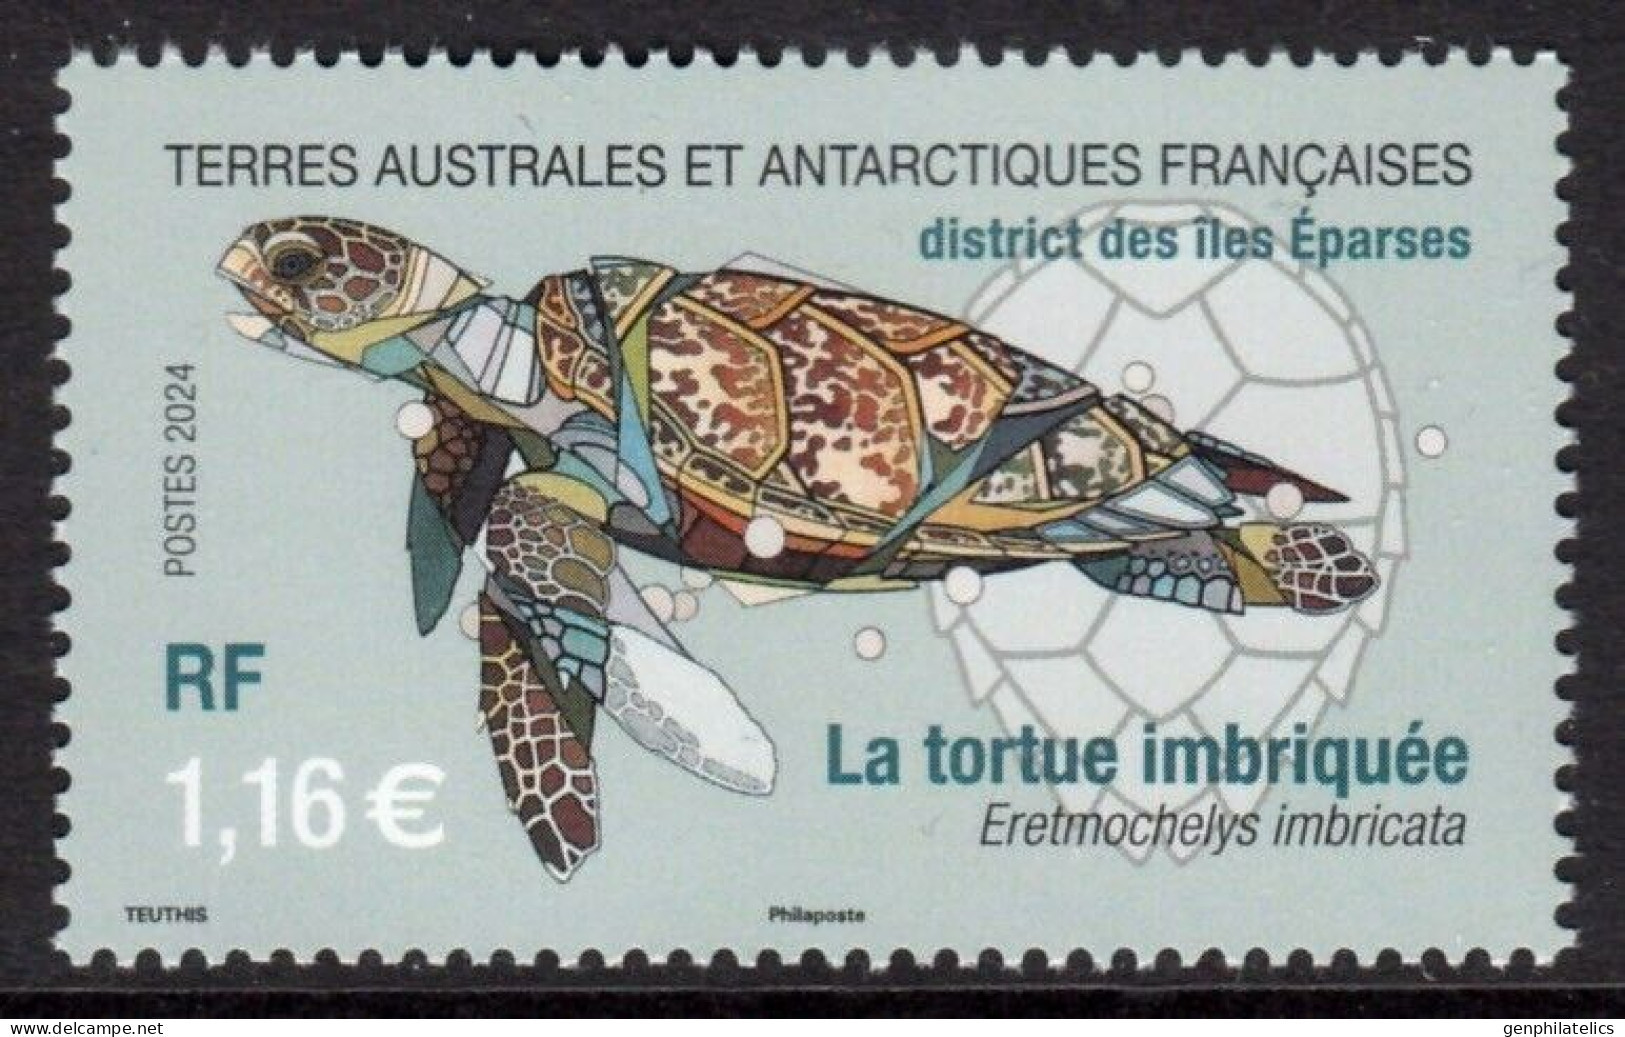 TAAF 2024 FAUNA Animals. Ocean TURTLE - Fine Stamp MNH - Unused Stamps